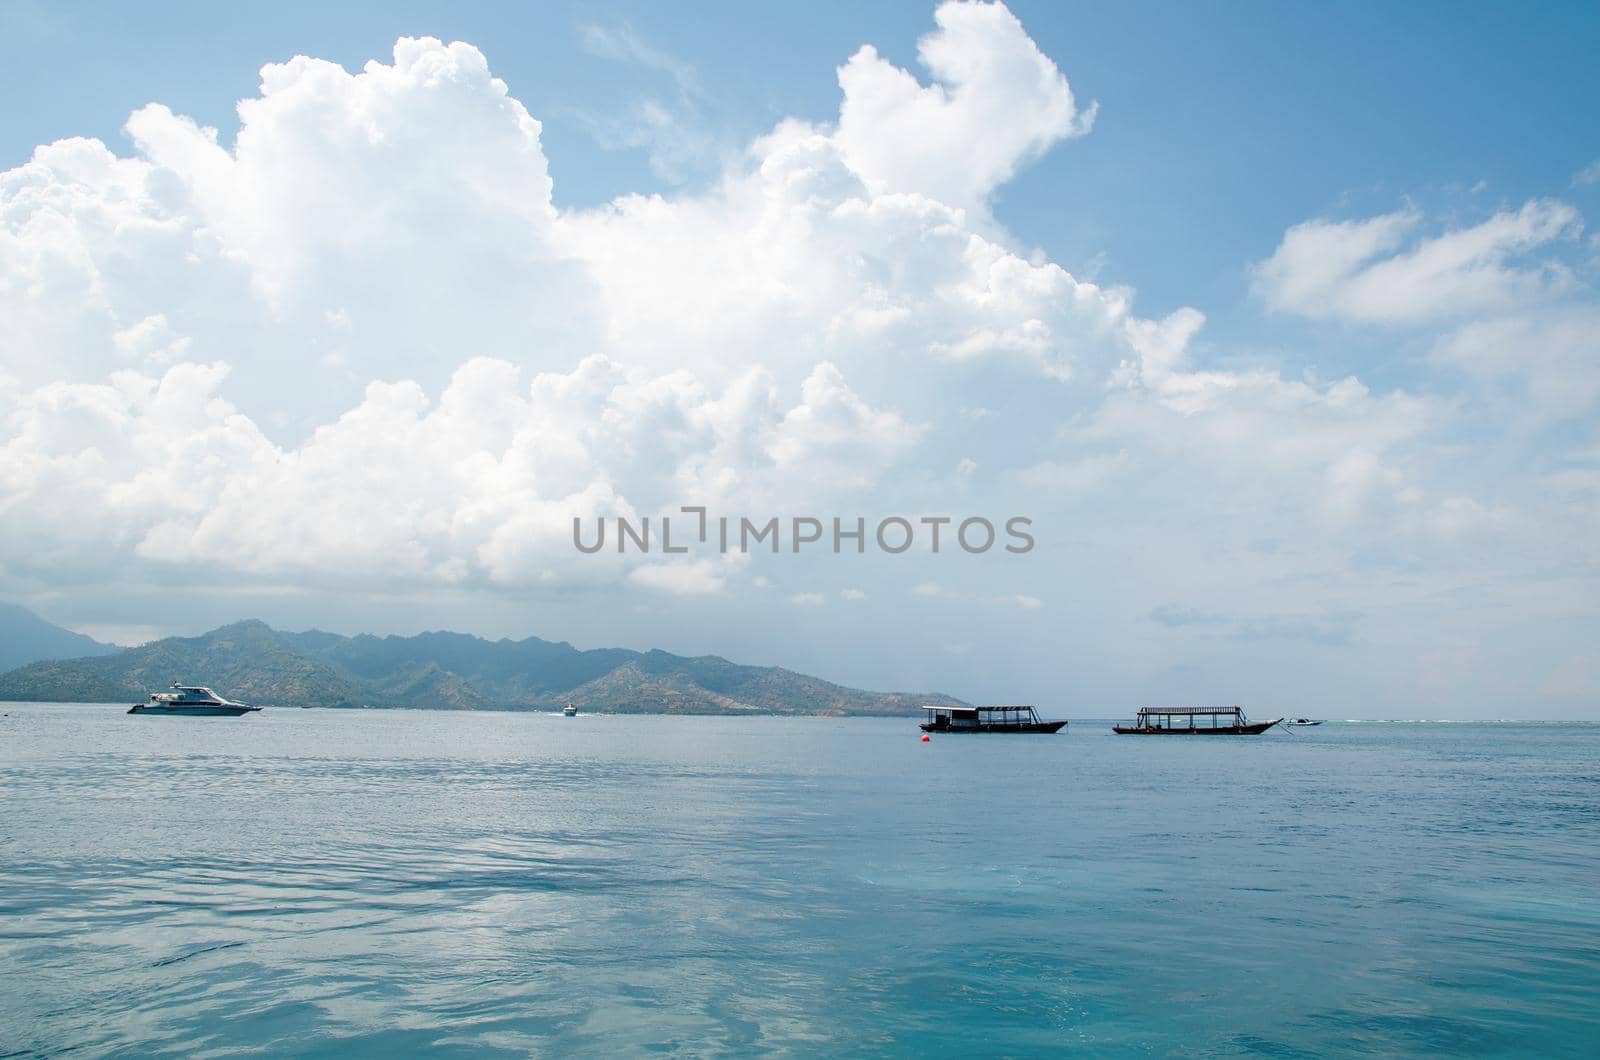 Islands Indonesia - stock image by Jyliana